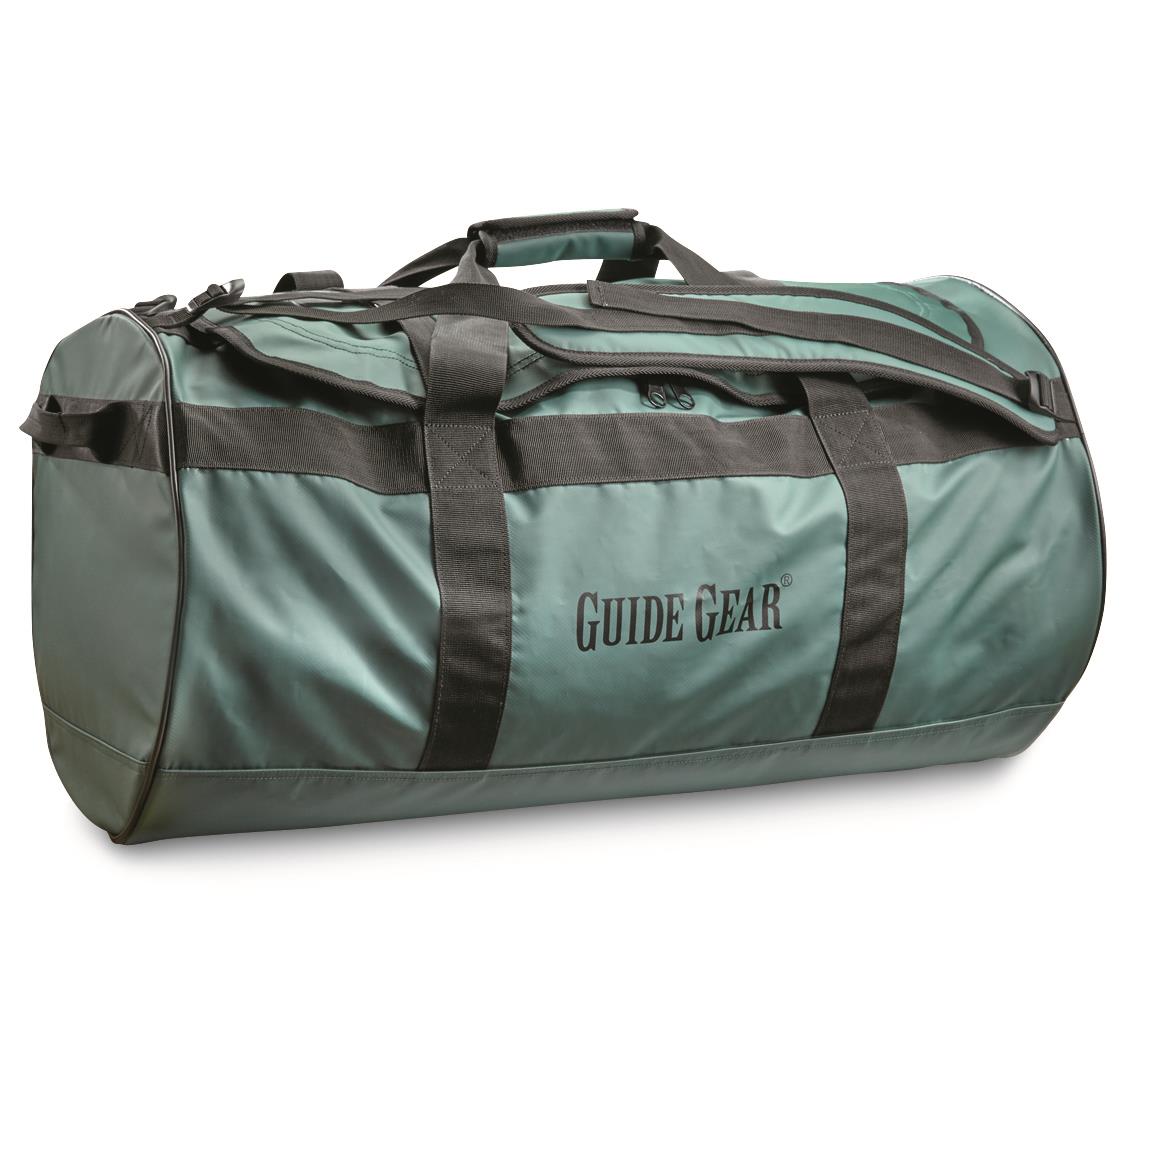 Guide Gear Waterproof Duffel Bag, 90 Liters - 623632, Gear & Duffel Bags at Sportsman&#39;s Guide